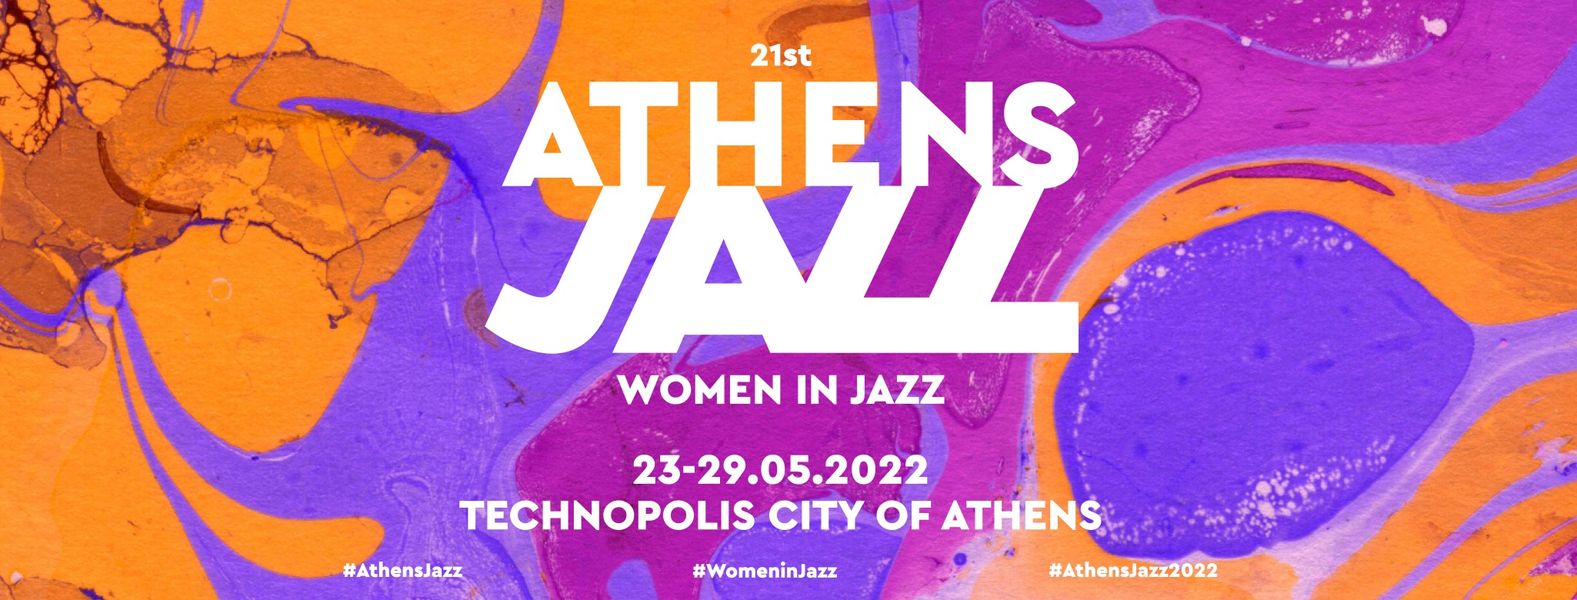 21st Athens Jazz 2022